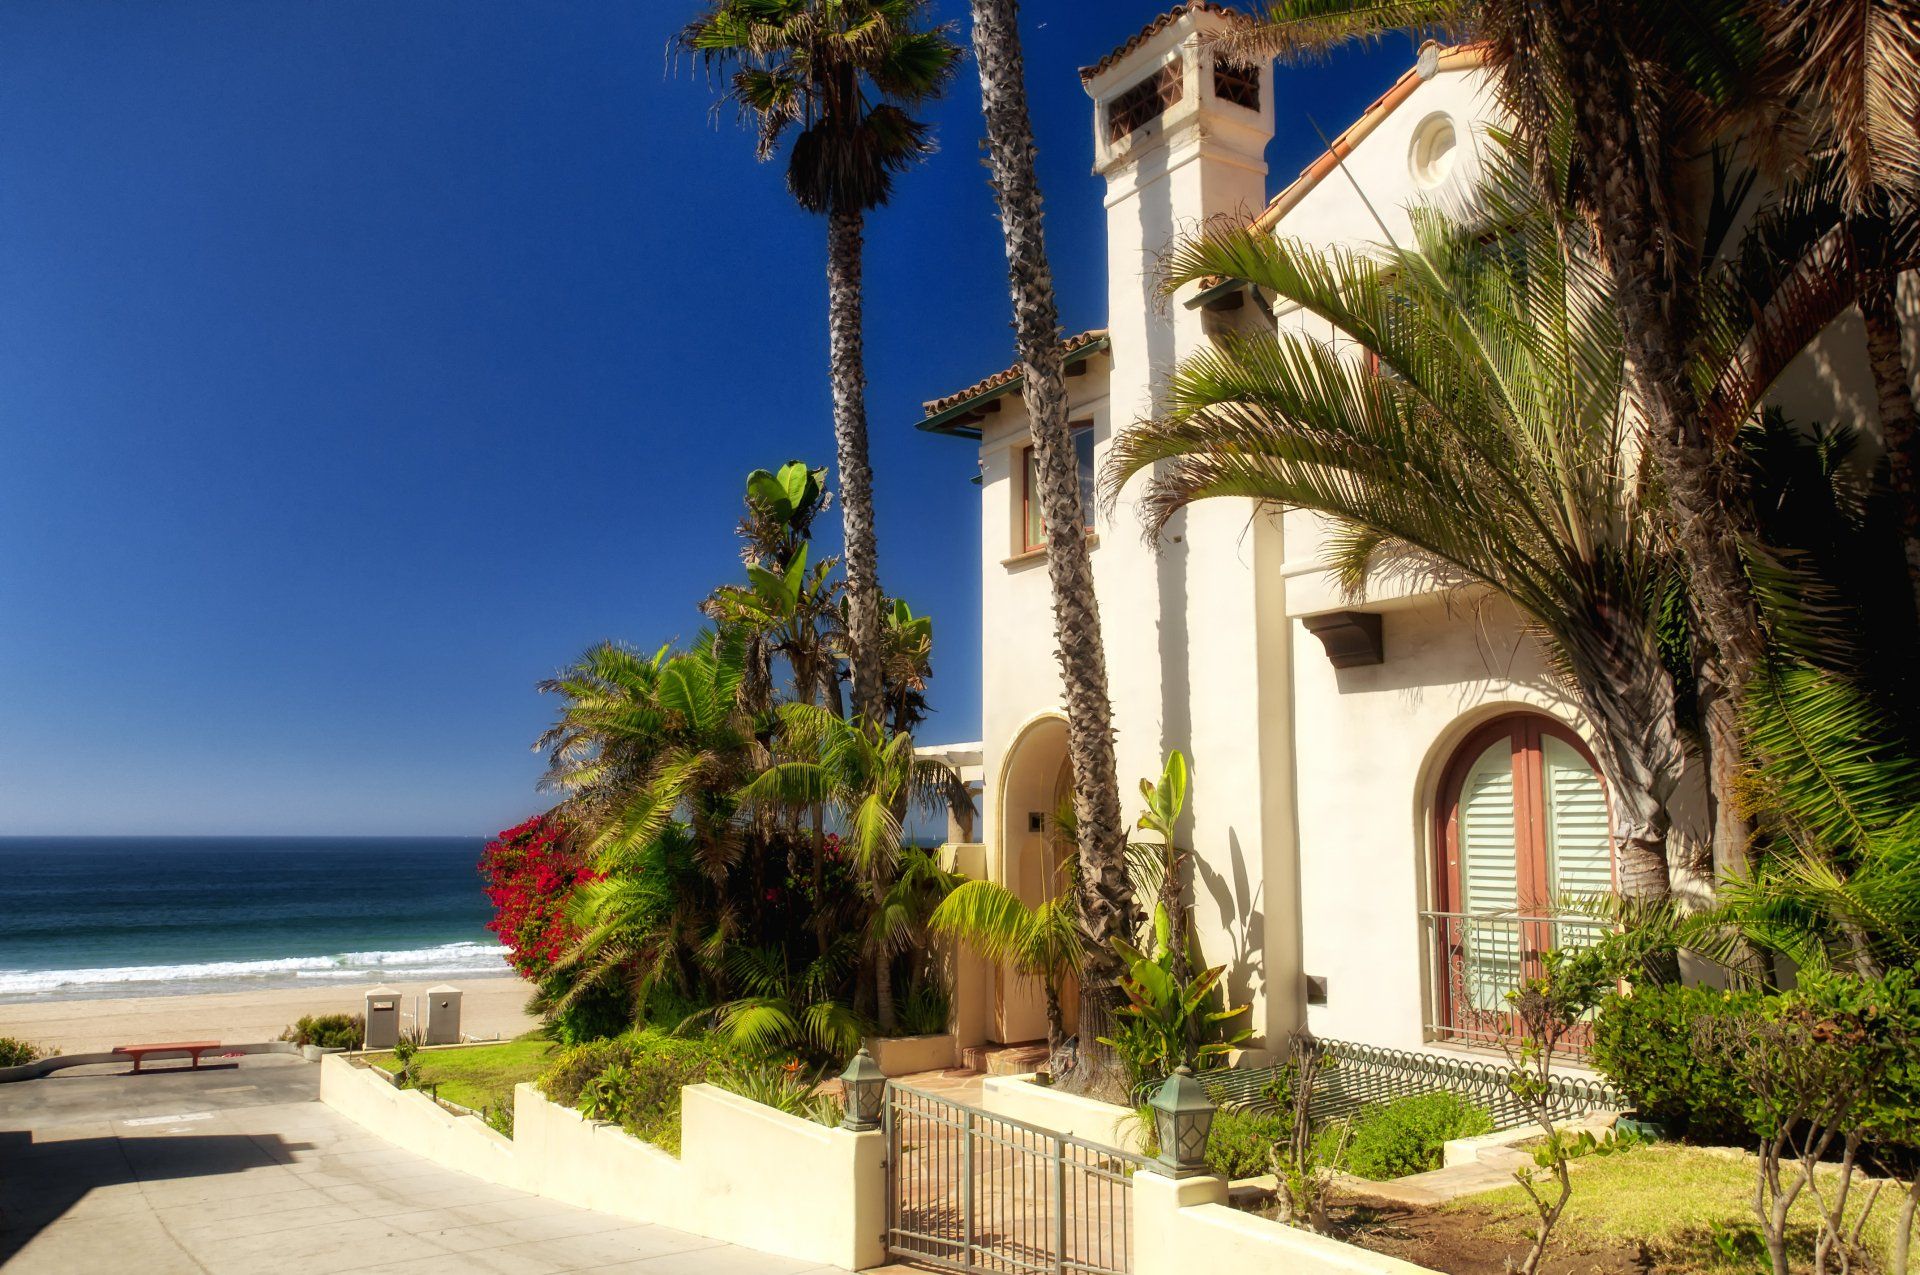 The generic architecture of West Coast Beach homes on Manhattan beach California on a sunny blue sky day.